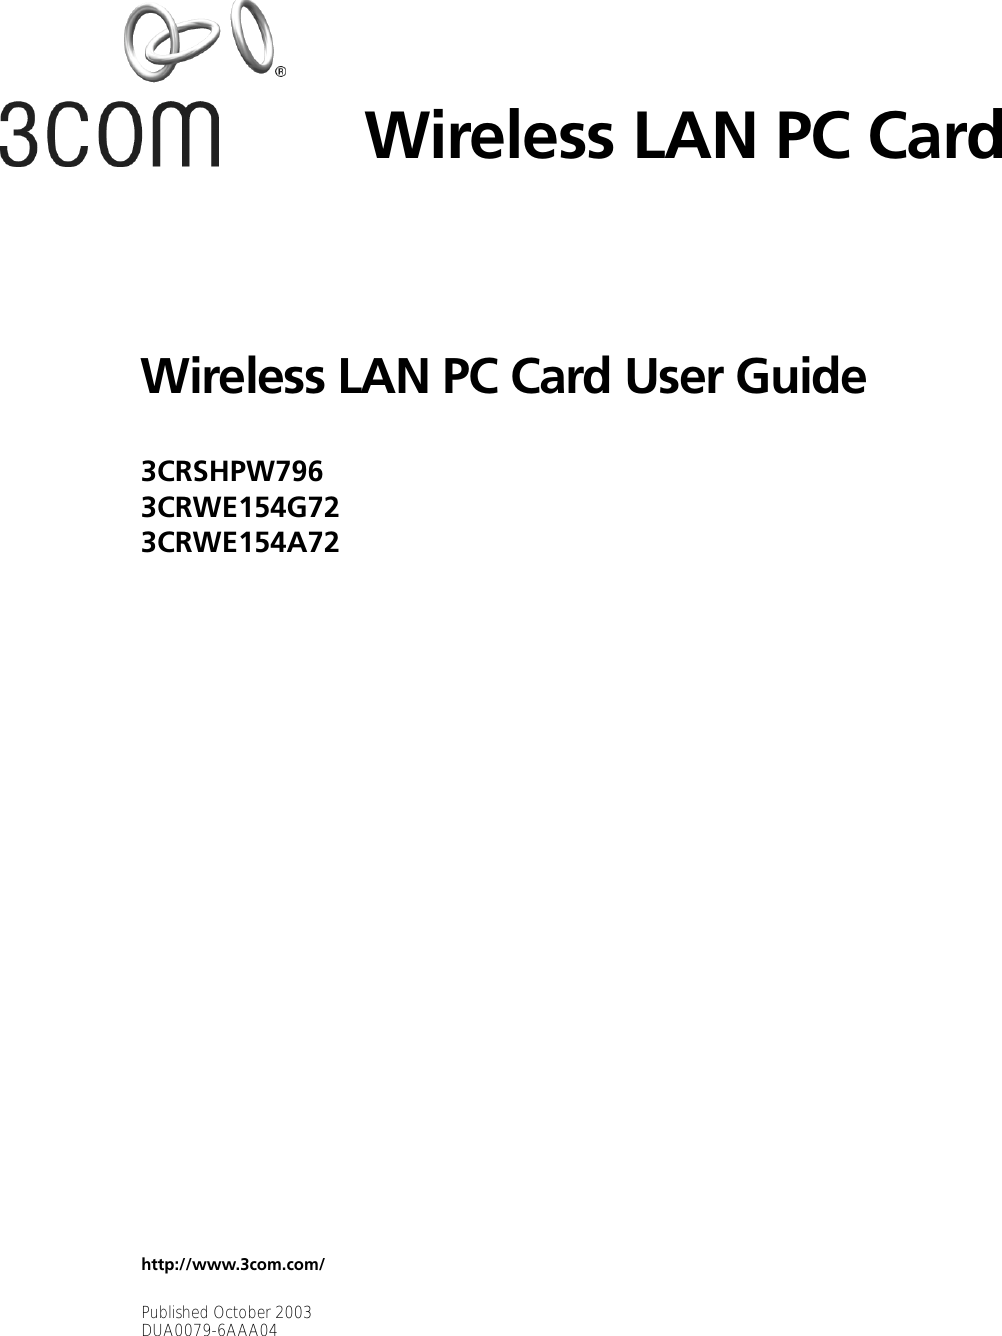 Wireless LAN PC Card User Guide3CRSHPW7963CRWE154G723CRWE154A72Wireless LAN PC Card http://www.3com.com/Published October 2003DUA0079-6AAA04